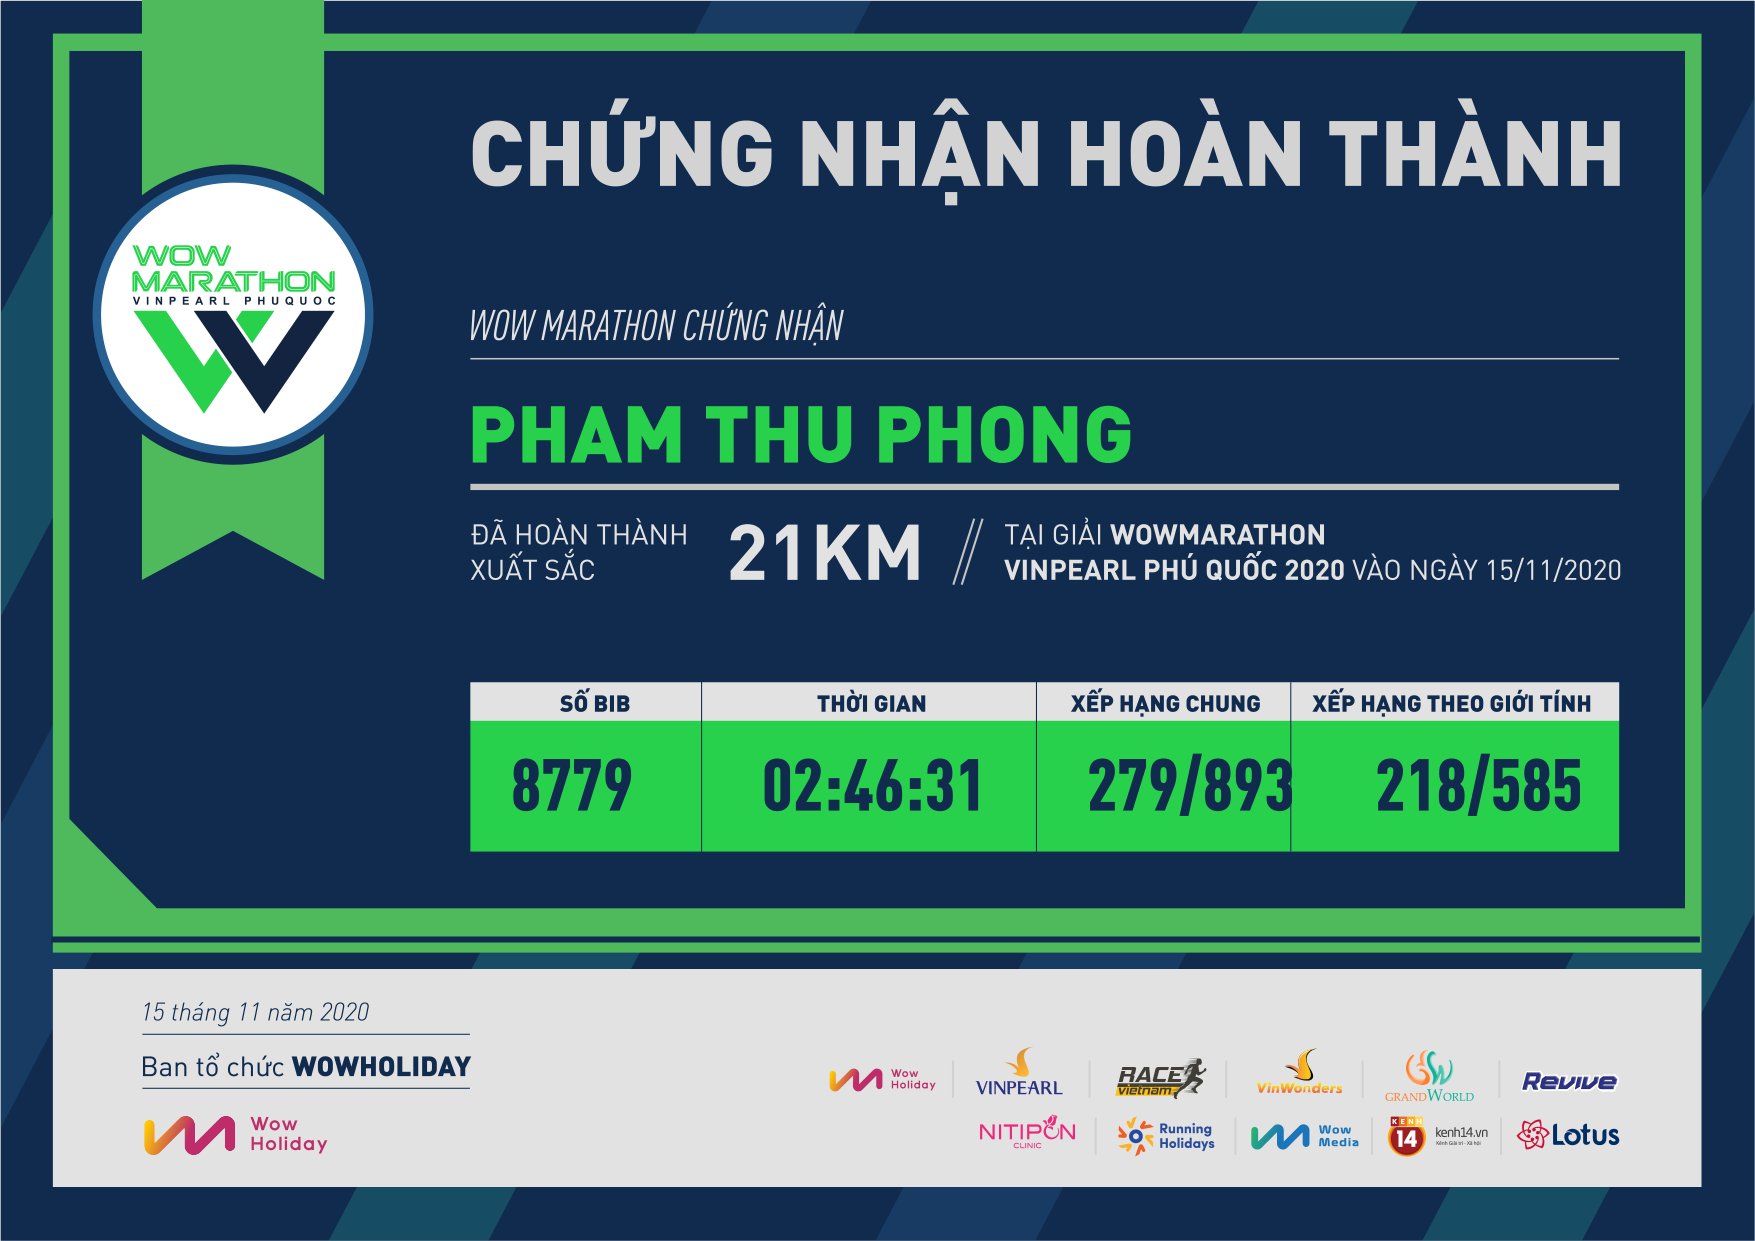 8779 - Pham Thu Phong